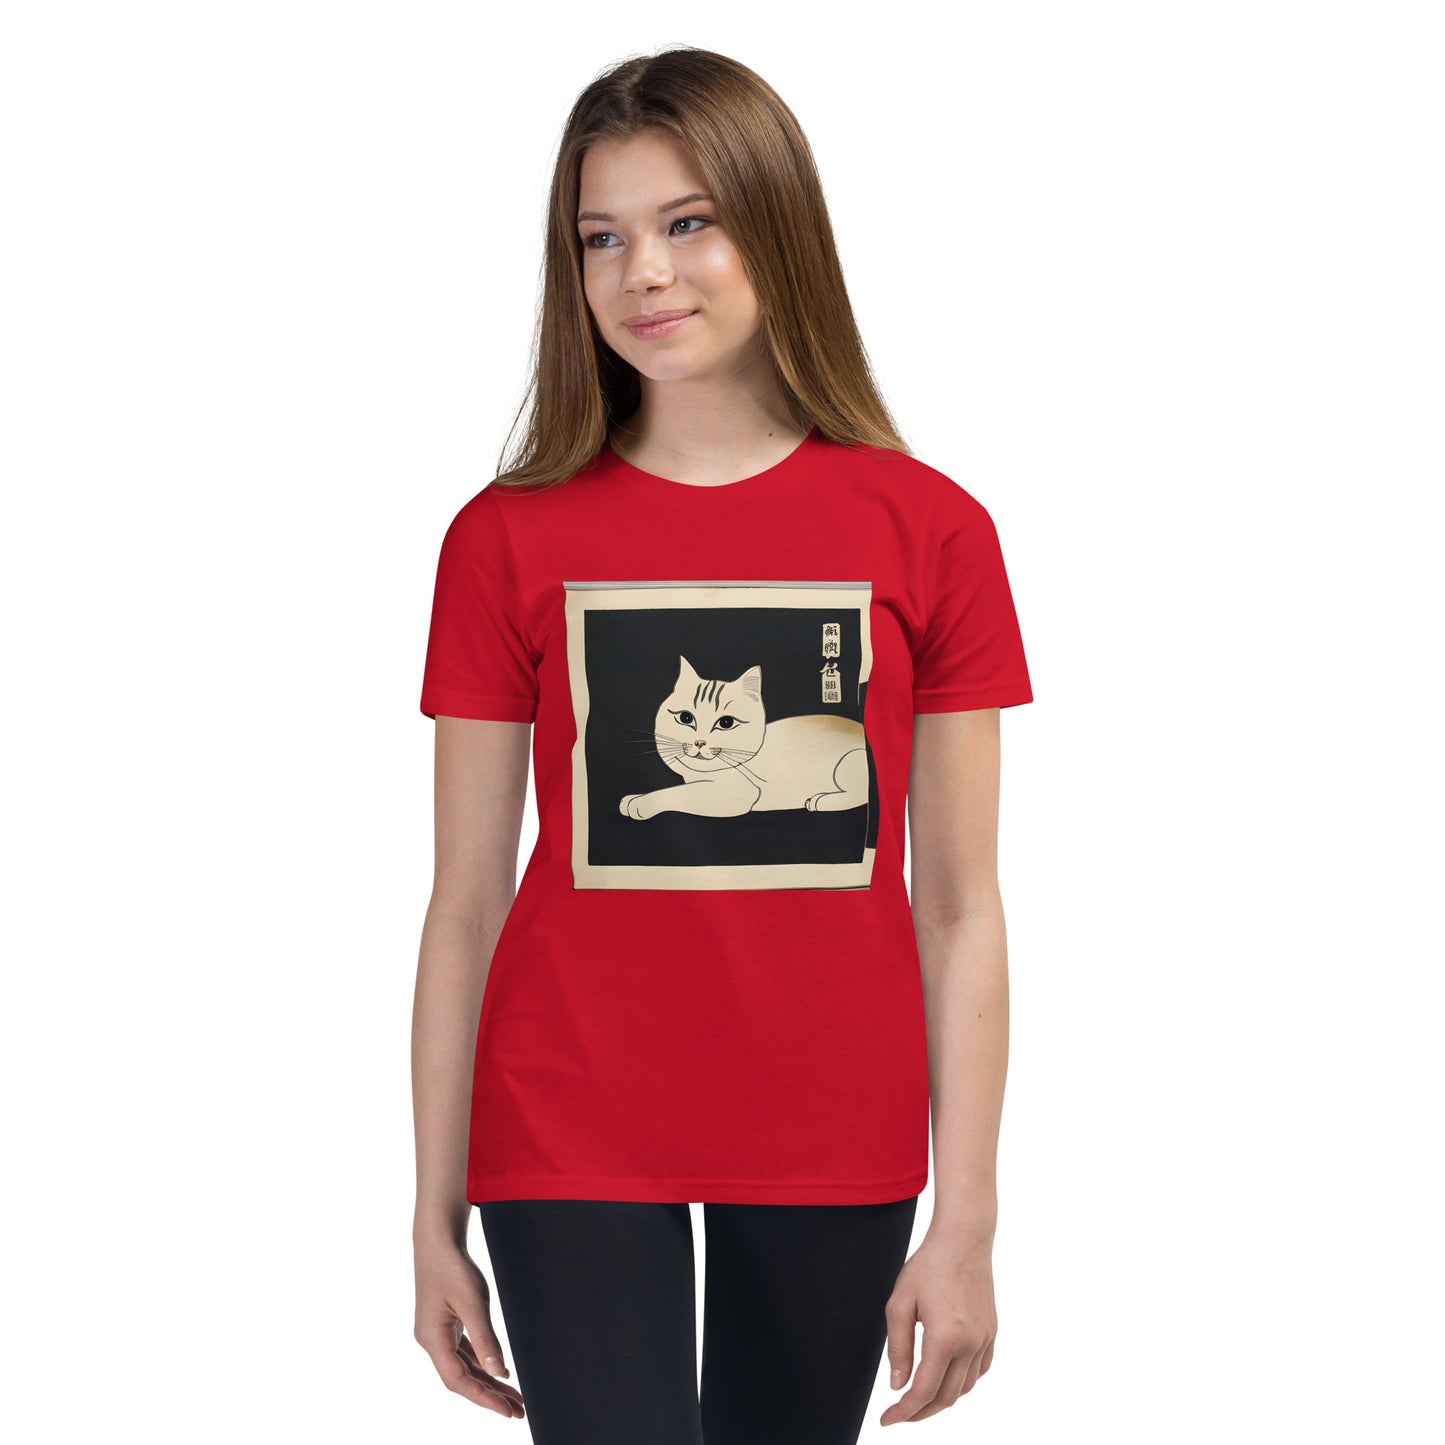 Meowsome Kid's T-Shirt - 017